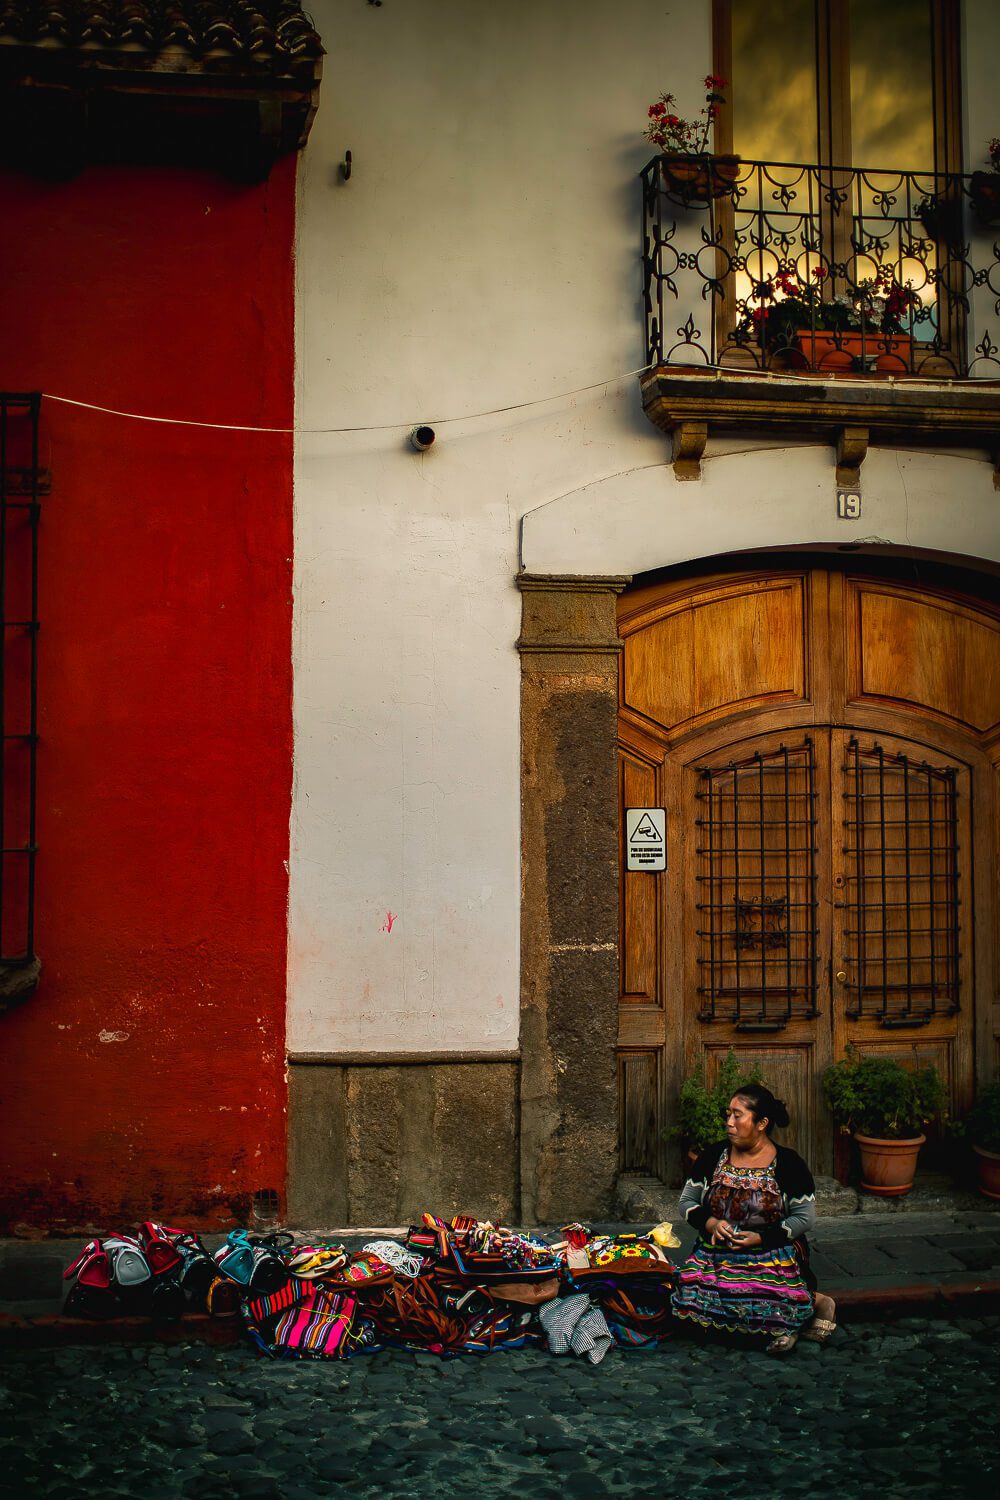 Charming streets of Antigua Guatemala